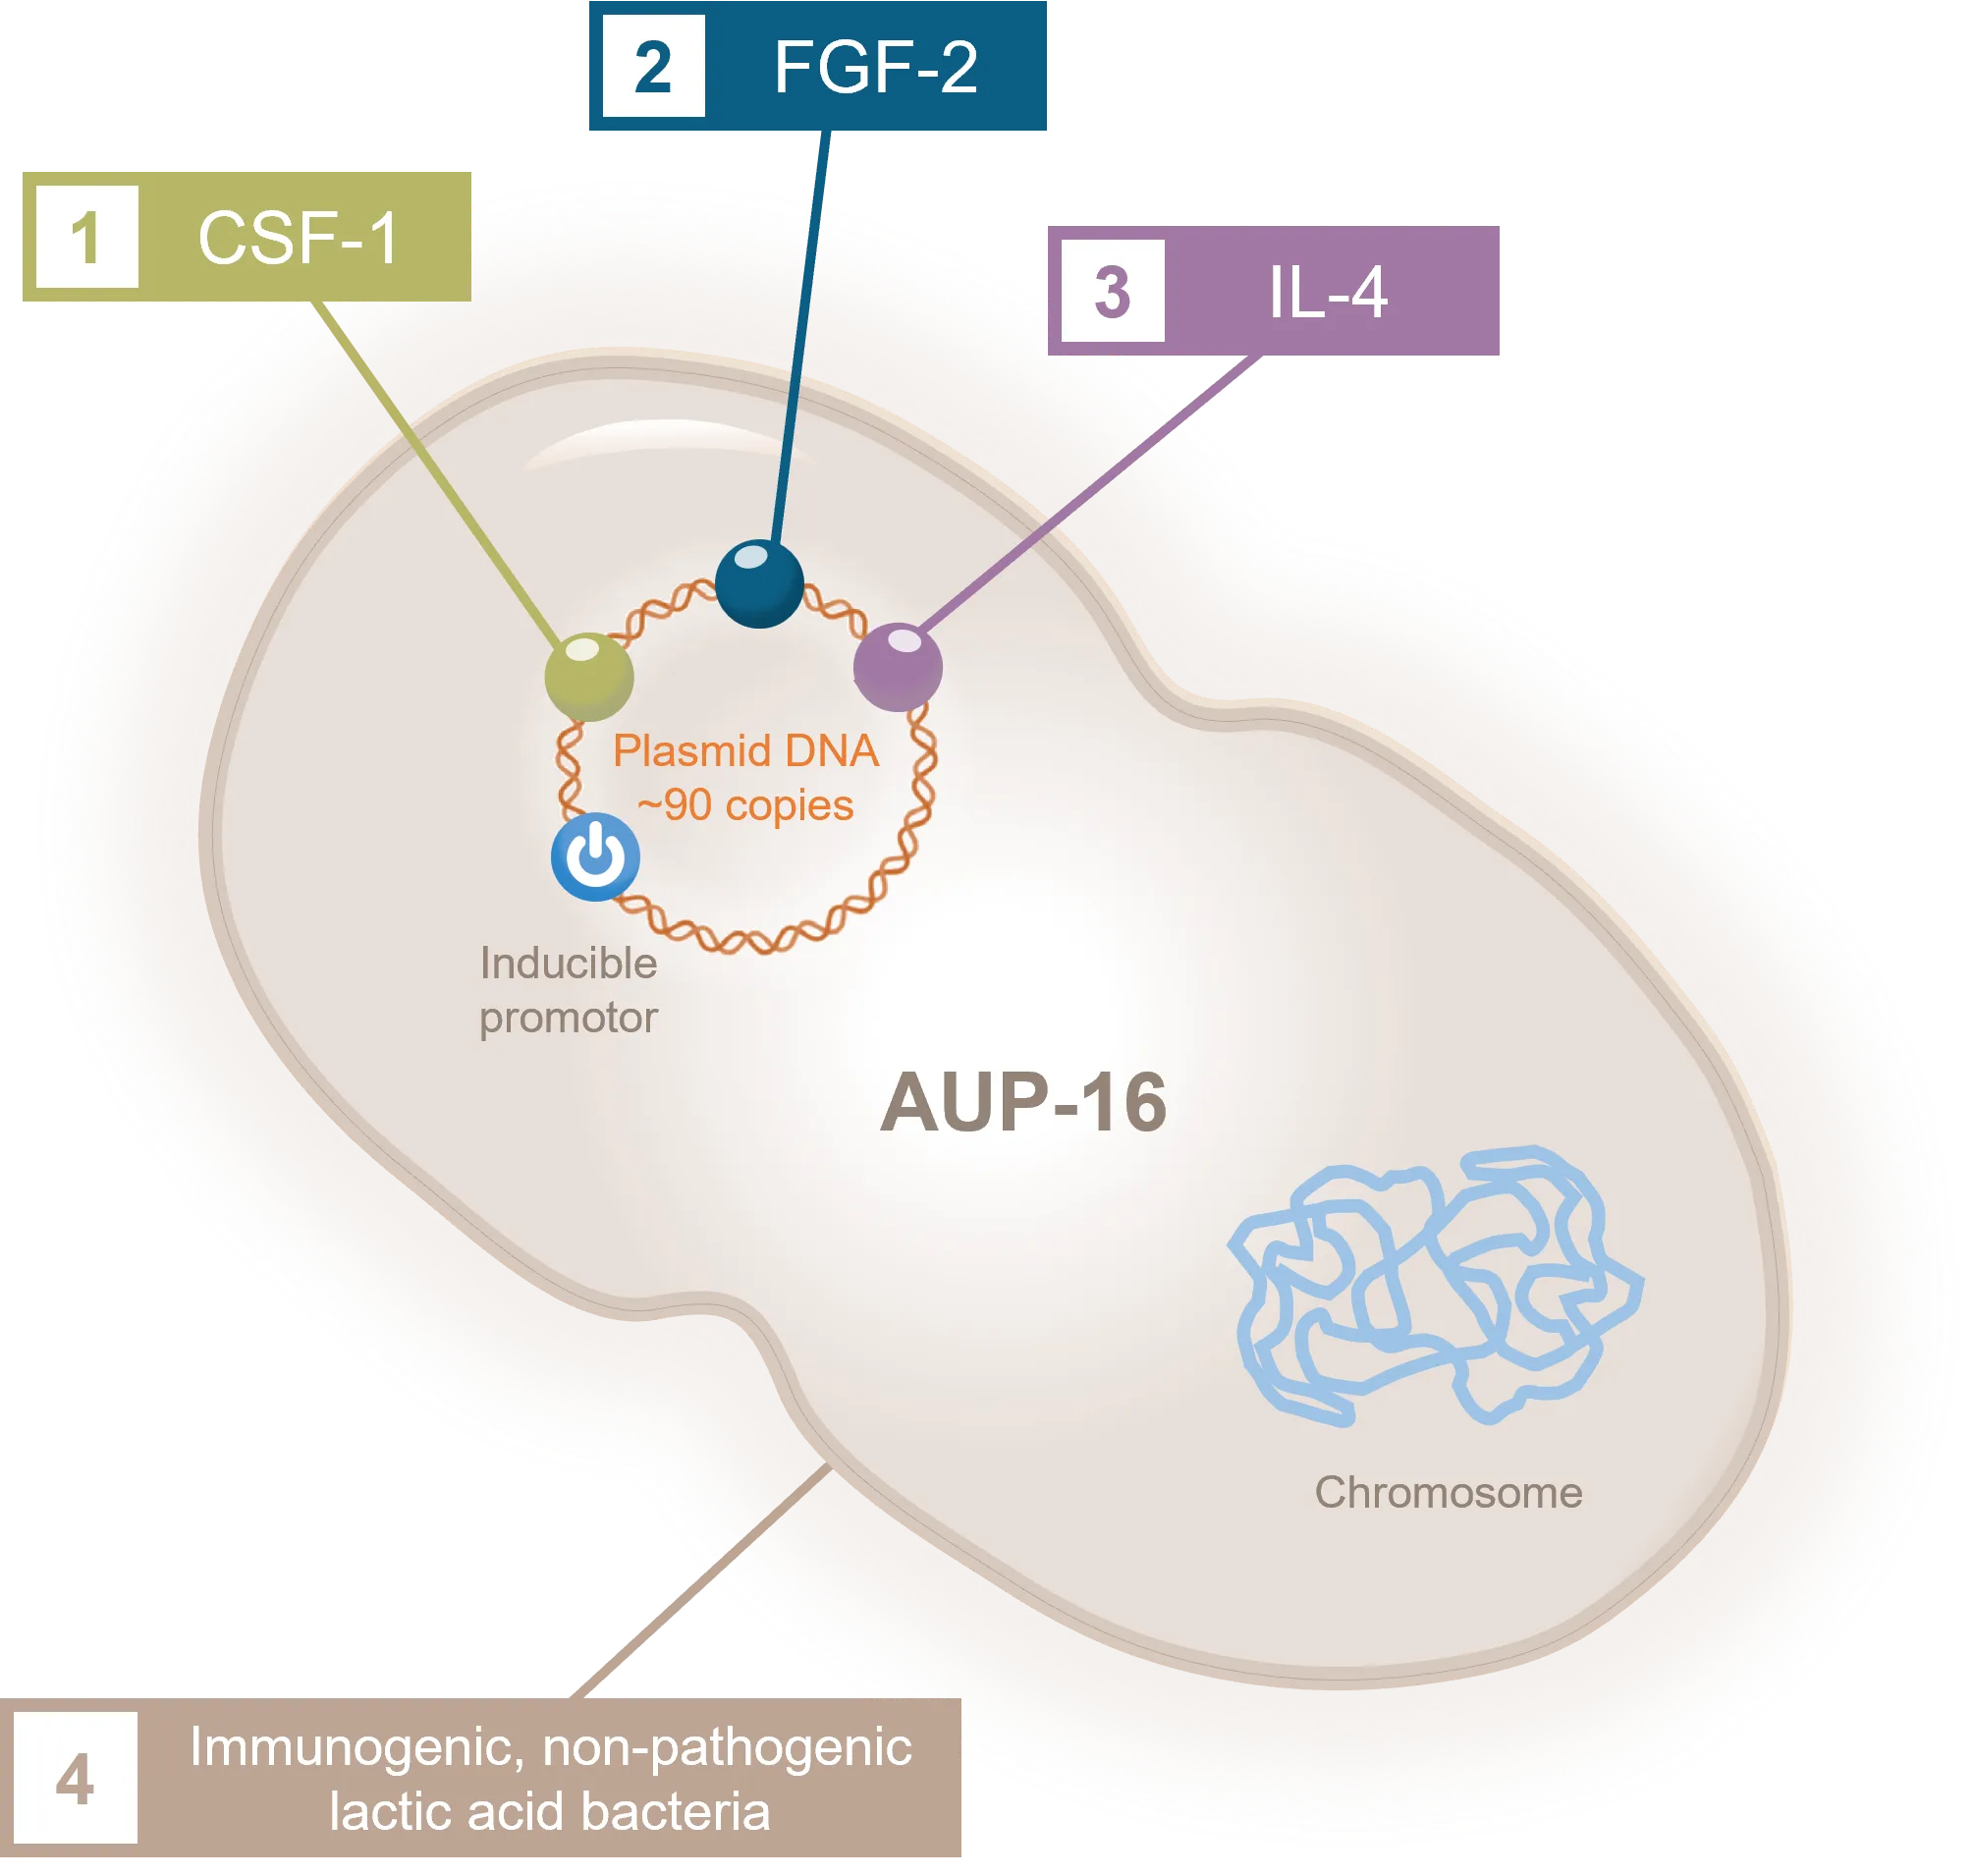 Illustration of Aurealis Therapeutics AUP-16 indication